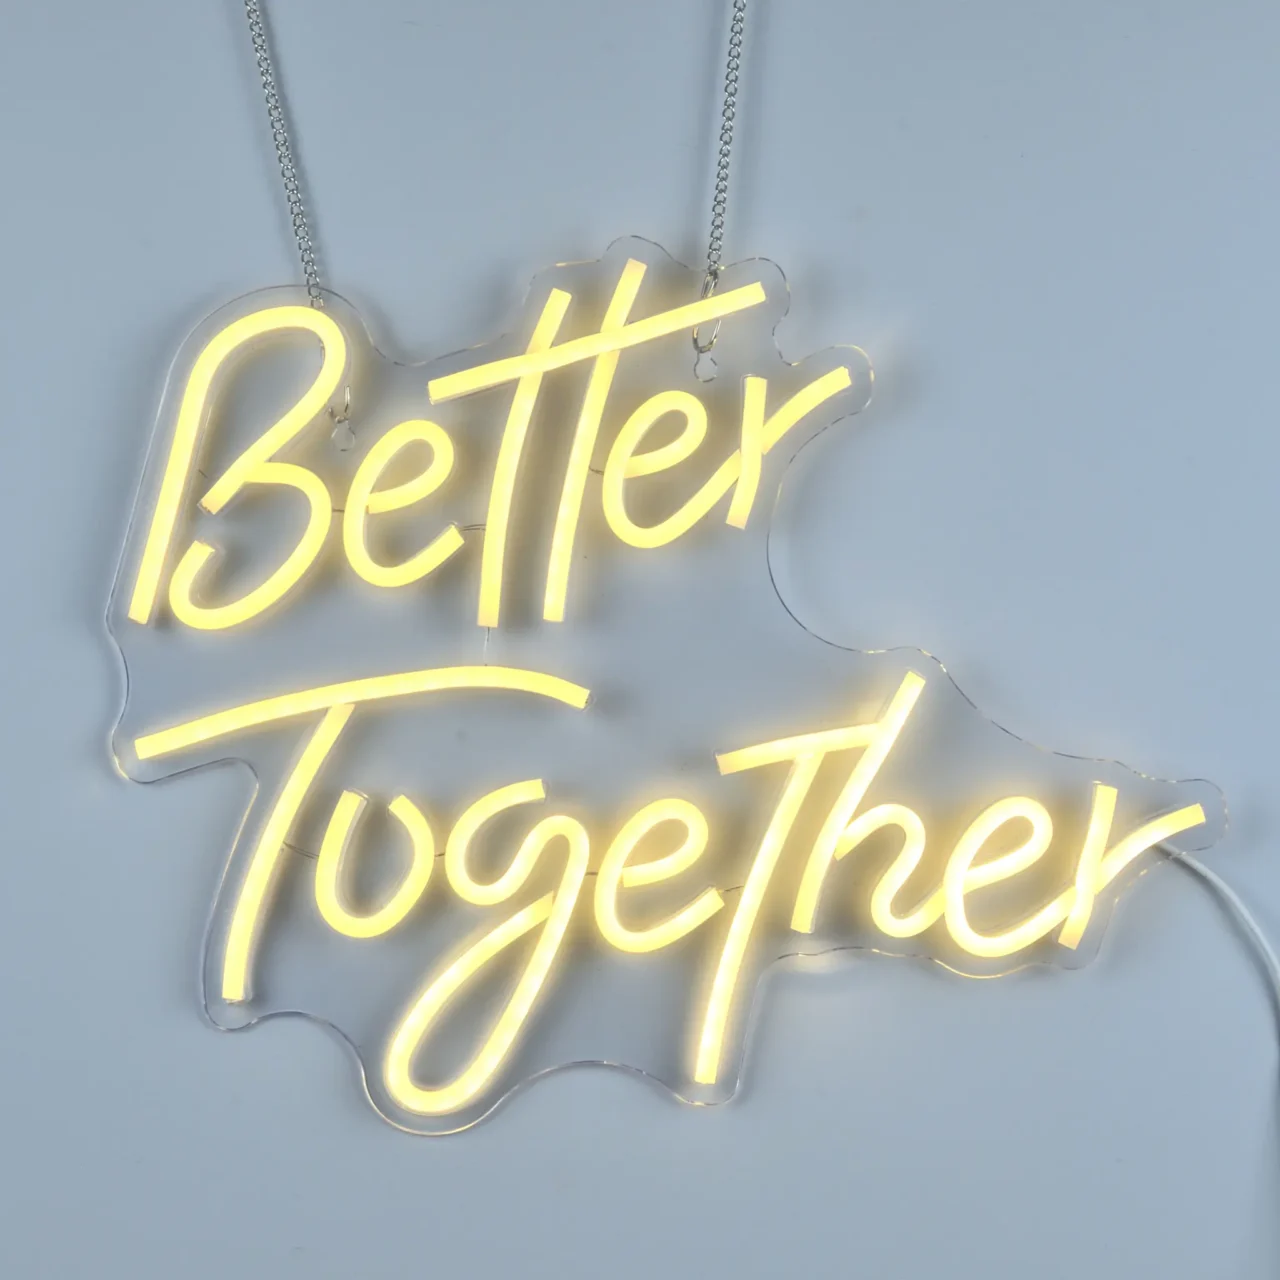 Better Together Neon Schild neu - Deko mieten